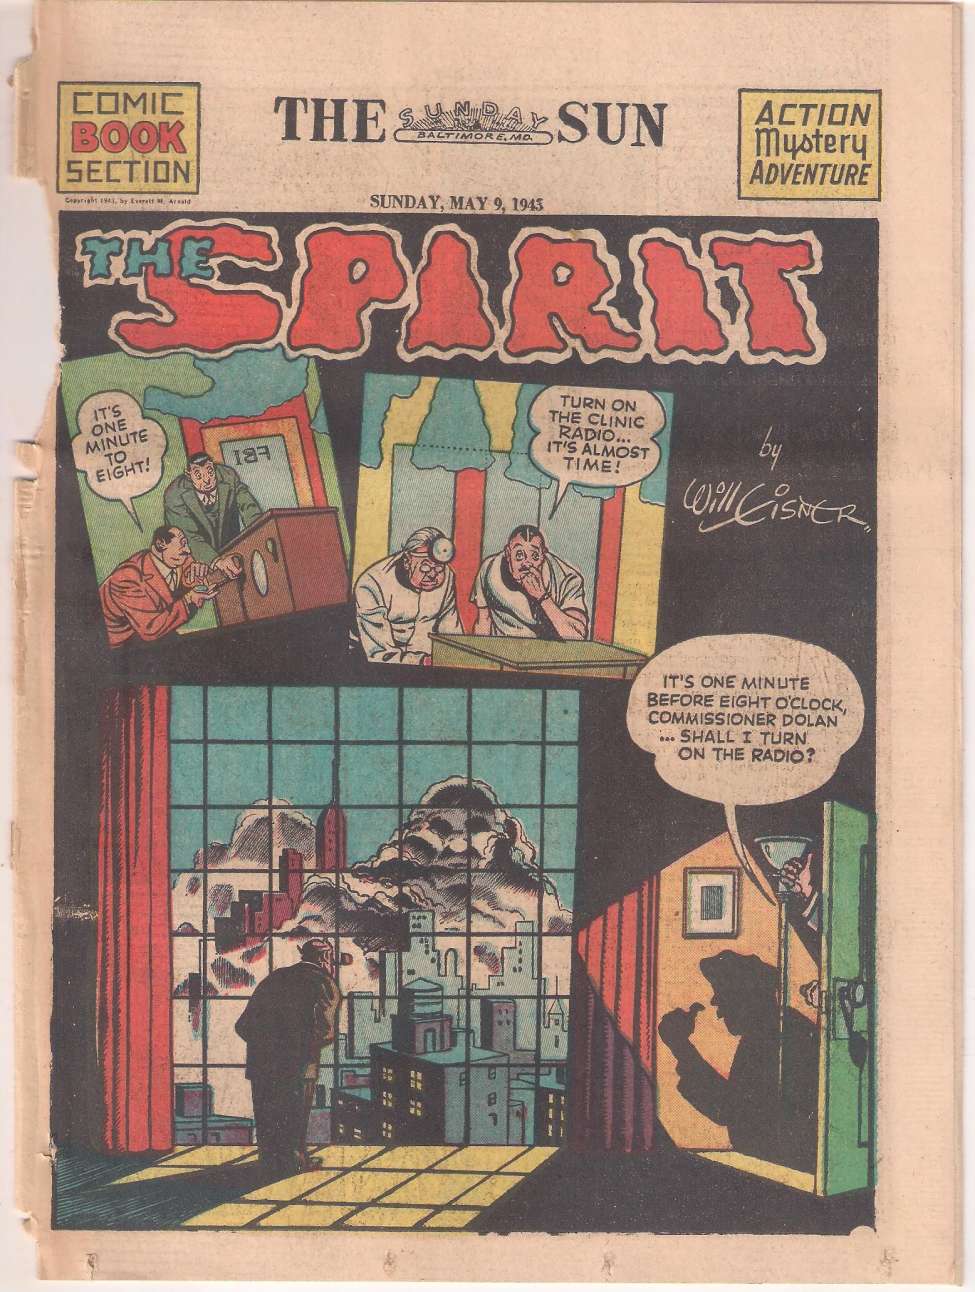 Comic Book Cover For The Spirit (1943-05-09) - Baltimore Sun